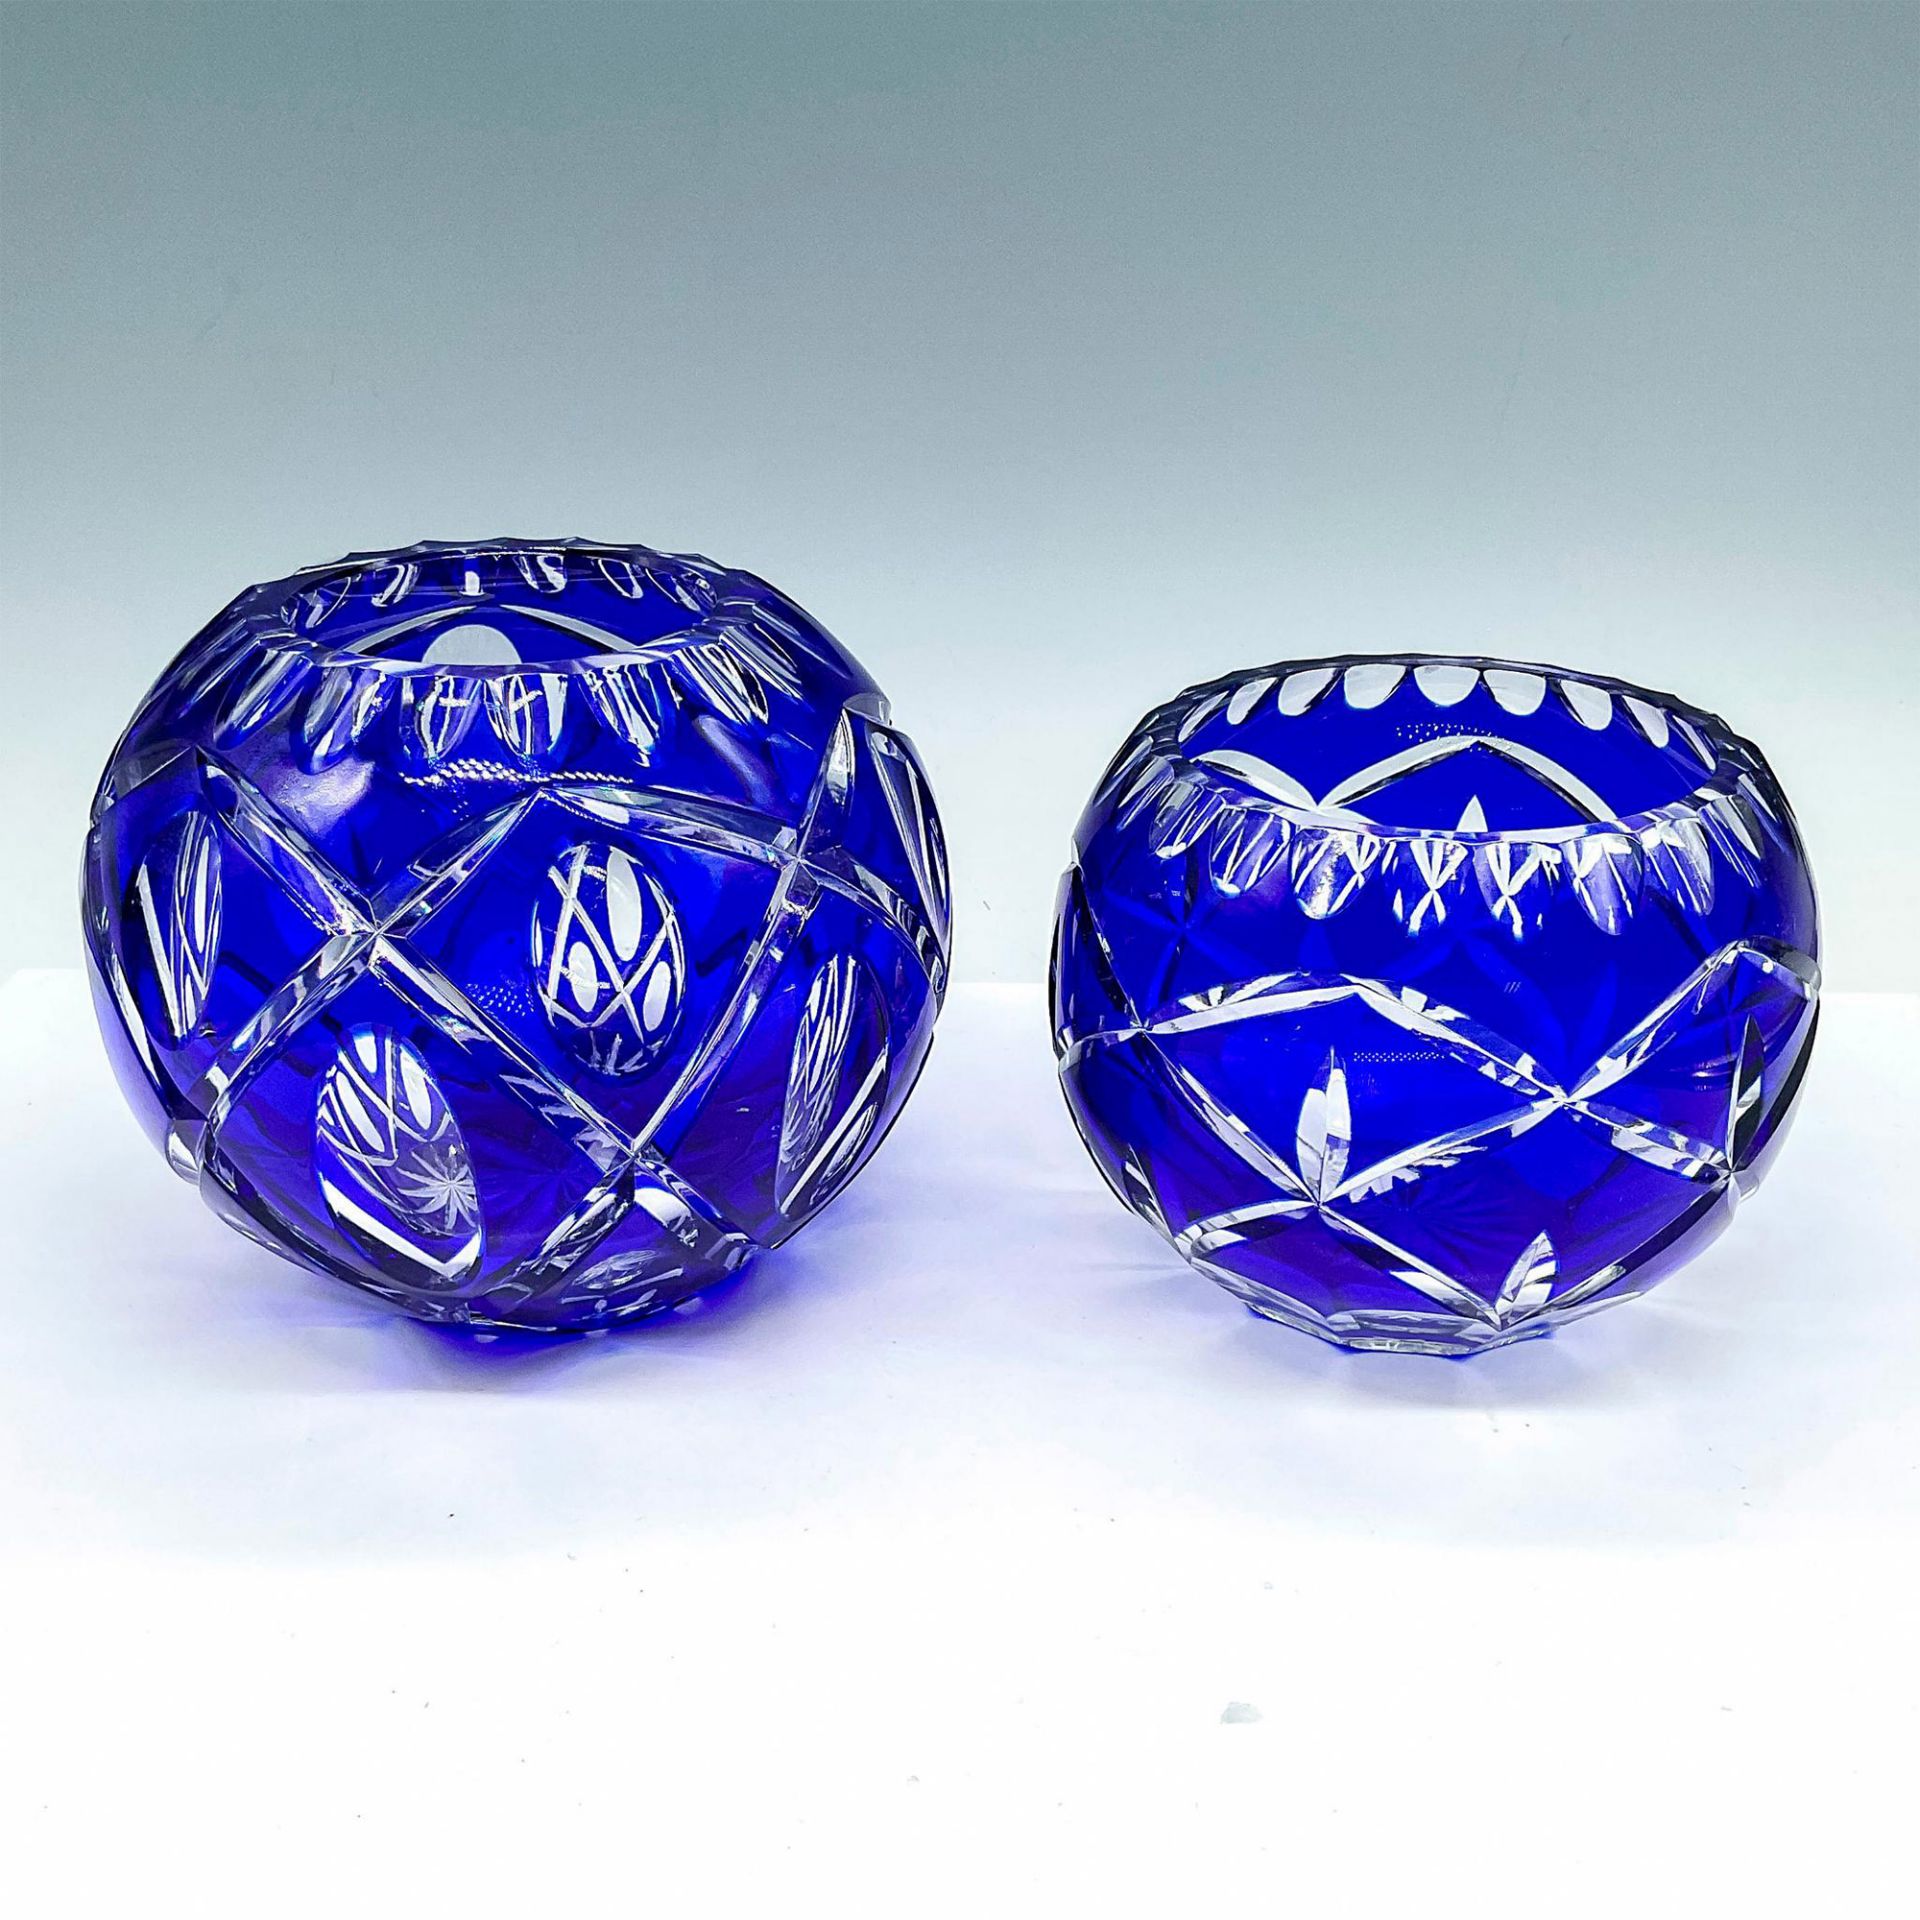 2pc Bohemian Crystal Decorative Bowls - Image 2 of 3